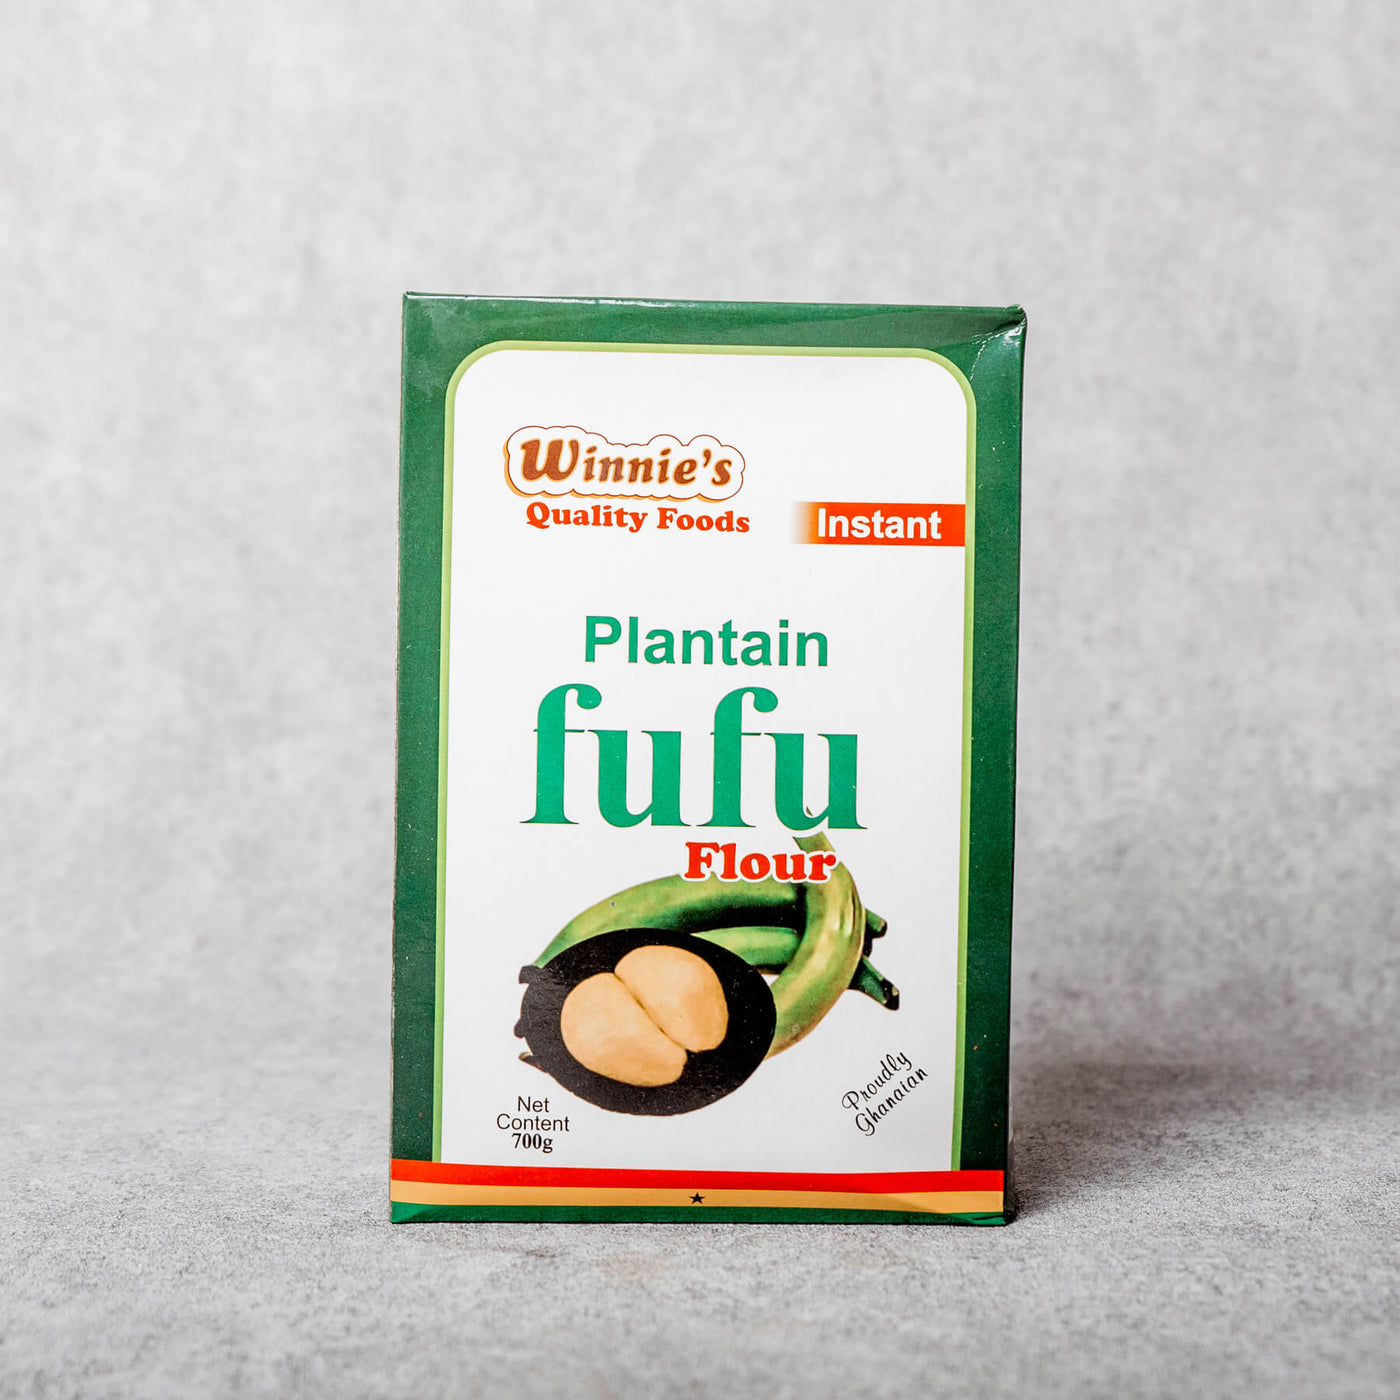 Winnies - Plantain Fufu